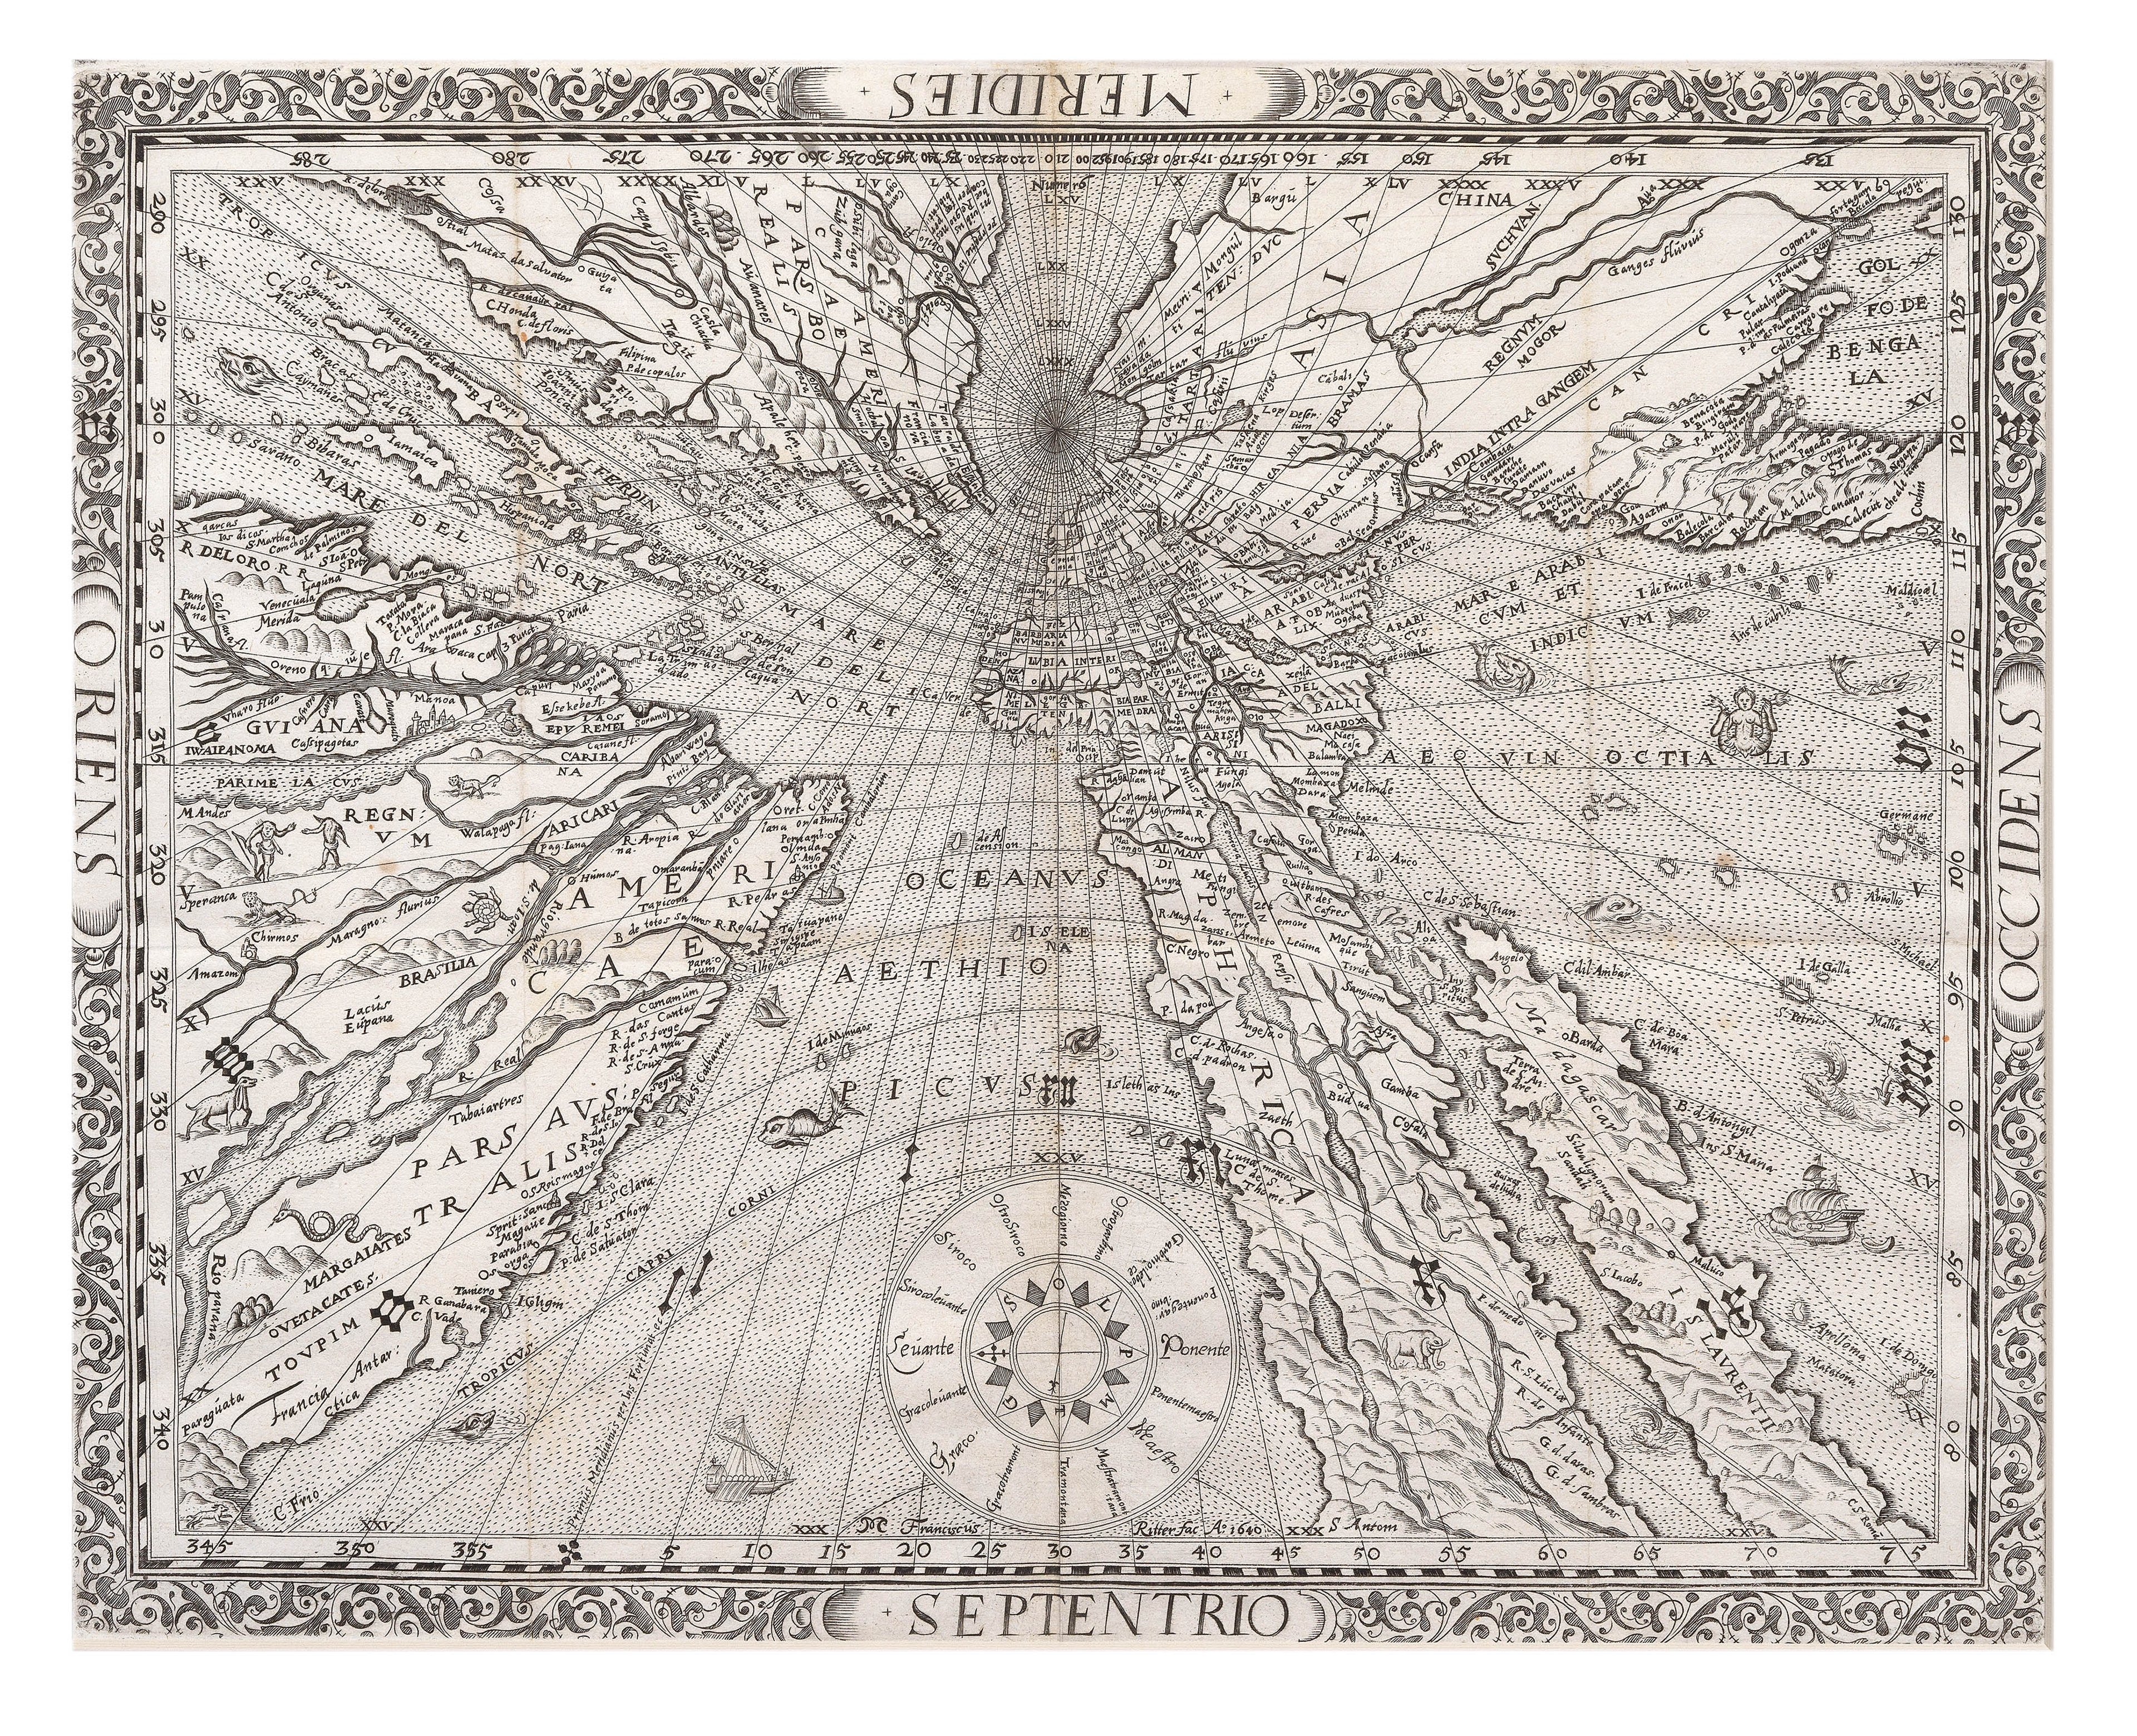 Franz Ritter, World on a gnomonic (sundial) projection, 1640